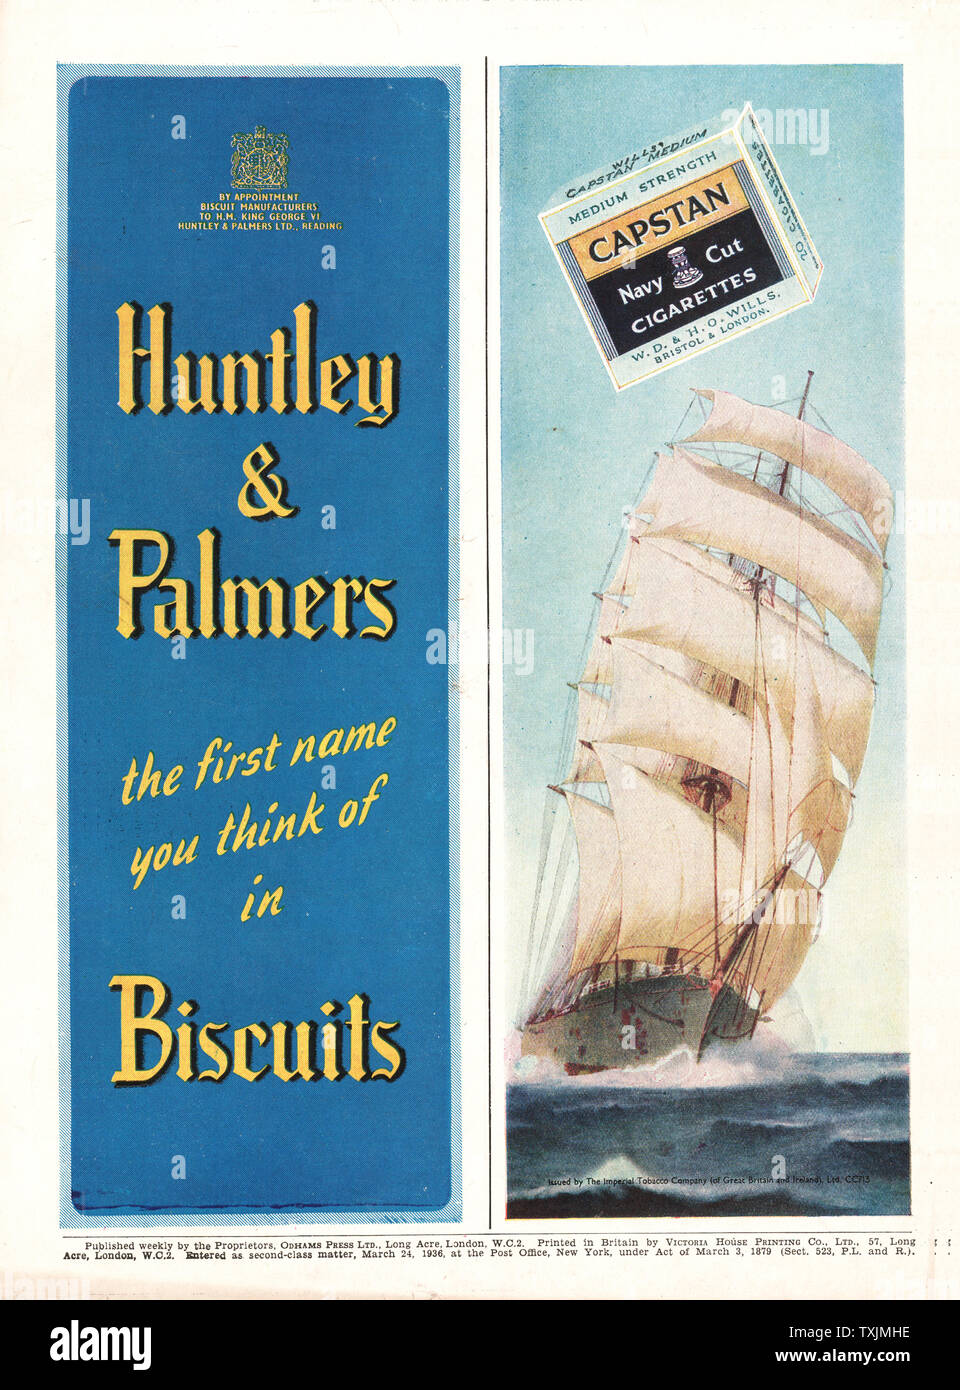 1946 UK Magazine Huntley & Palmers Biscuits Advert Stock Photo